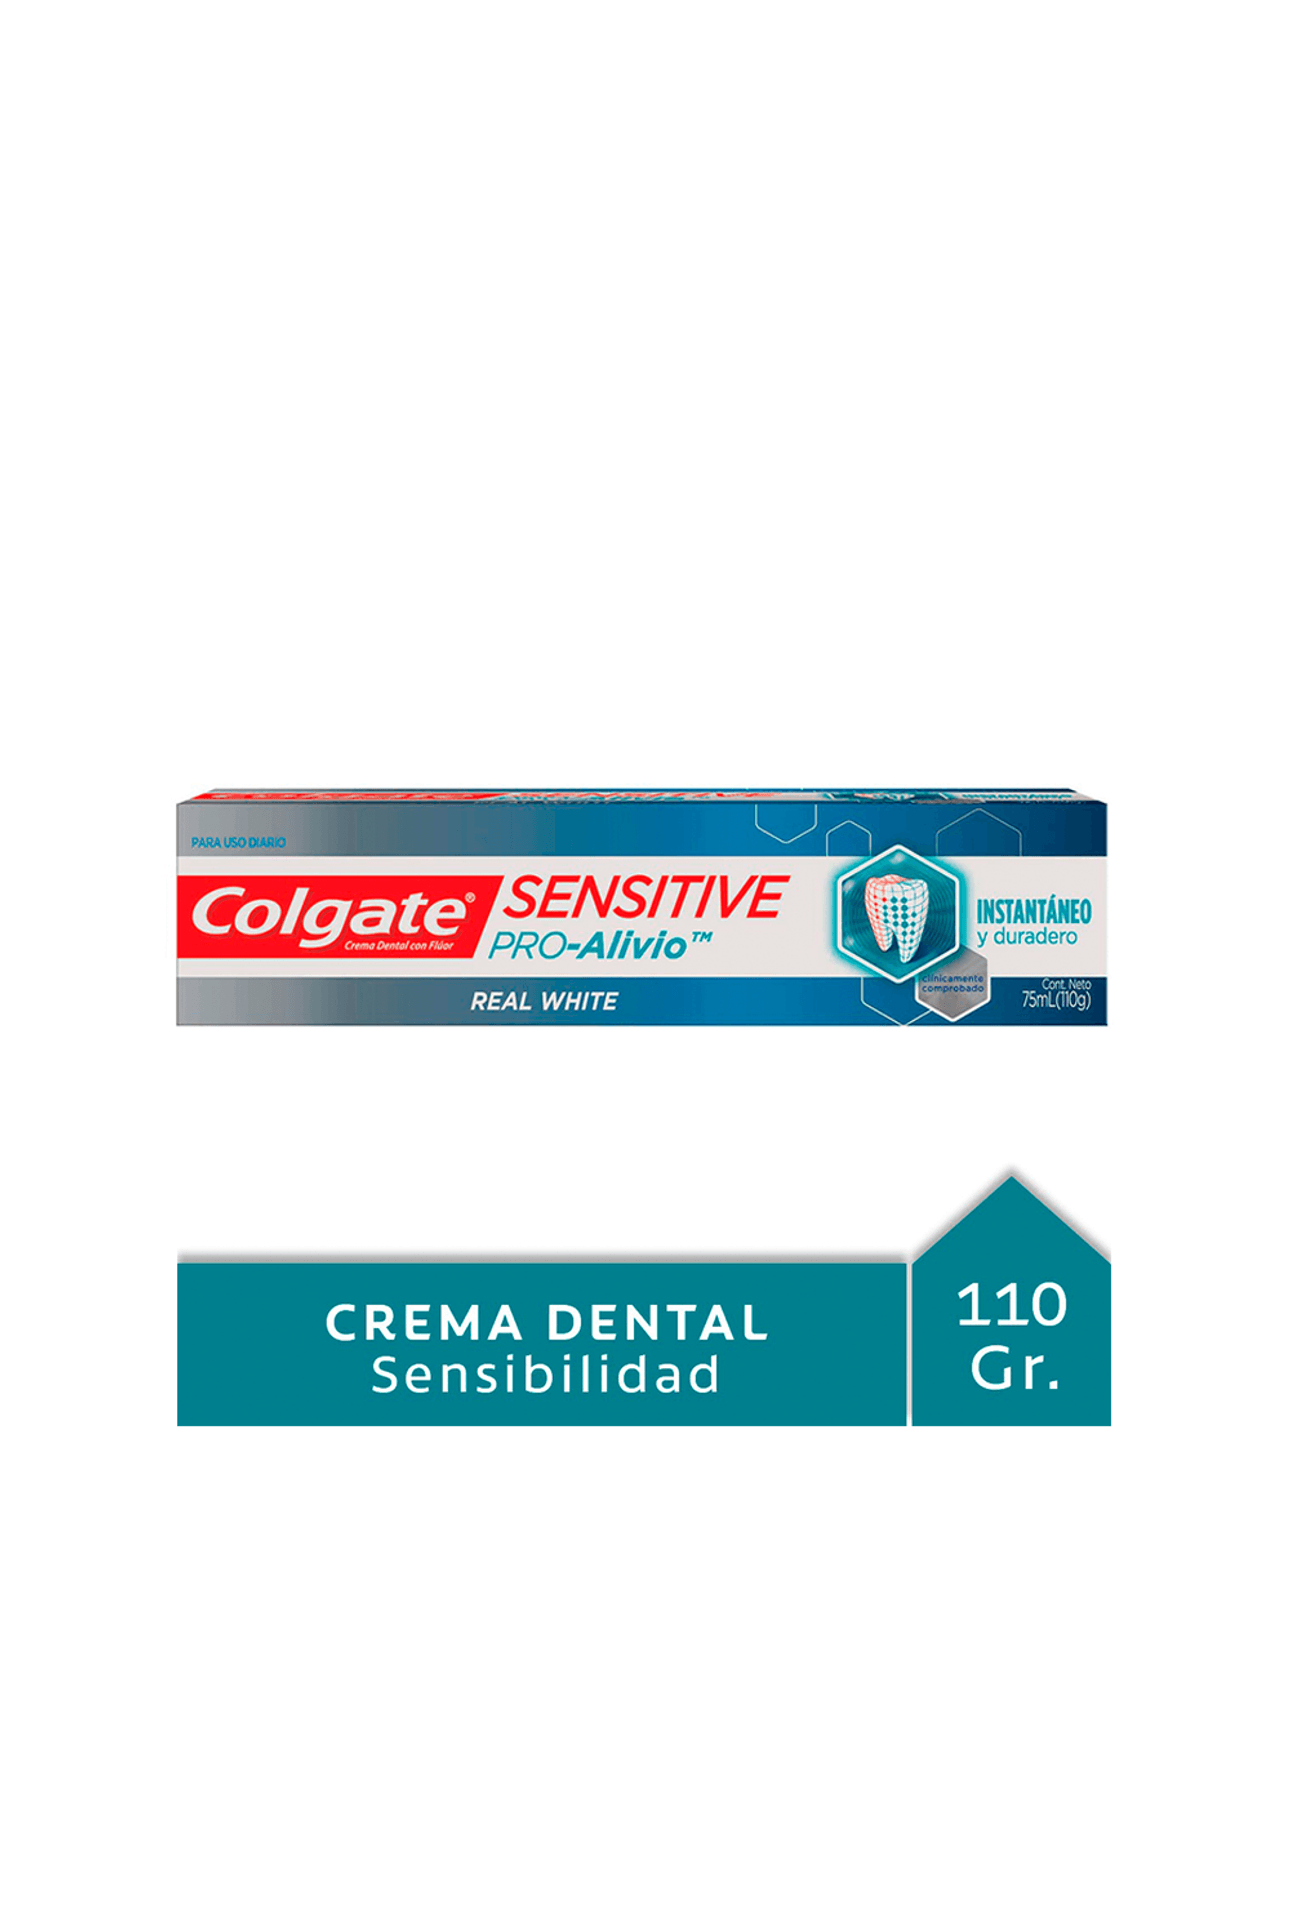 2092333_Colgate-Crema-Dental-Sensitive-Pro-Alivio-White-x-110-gr_img1